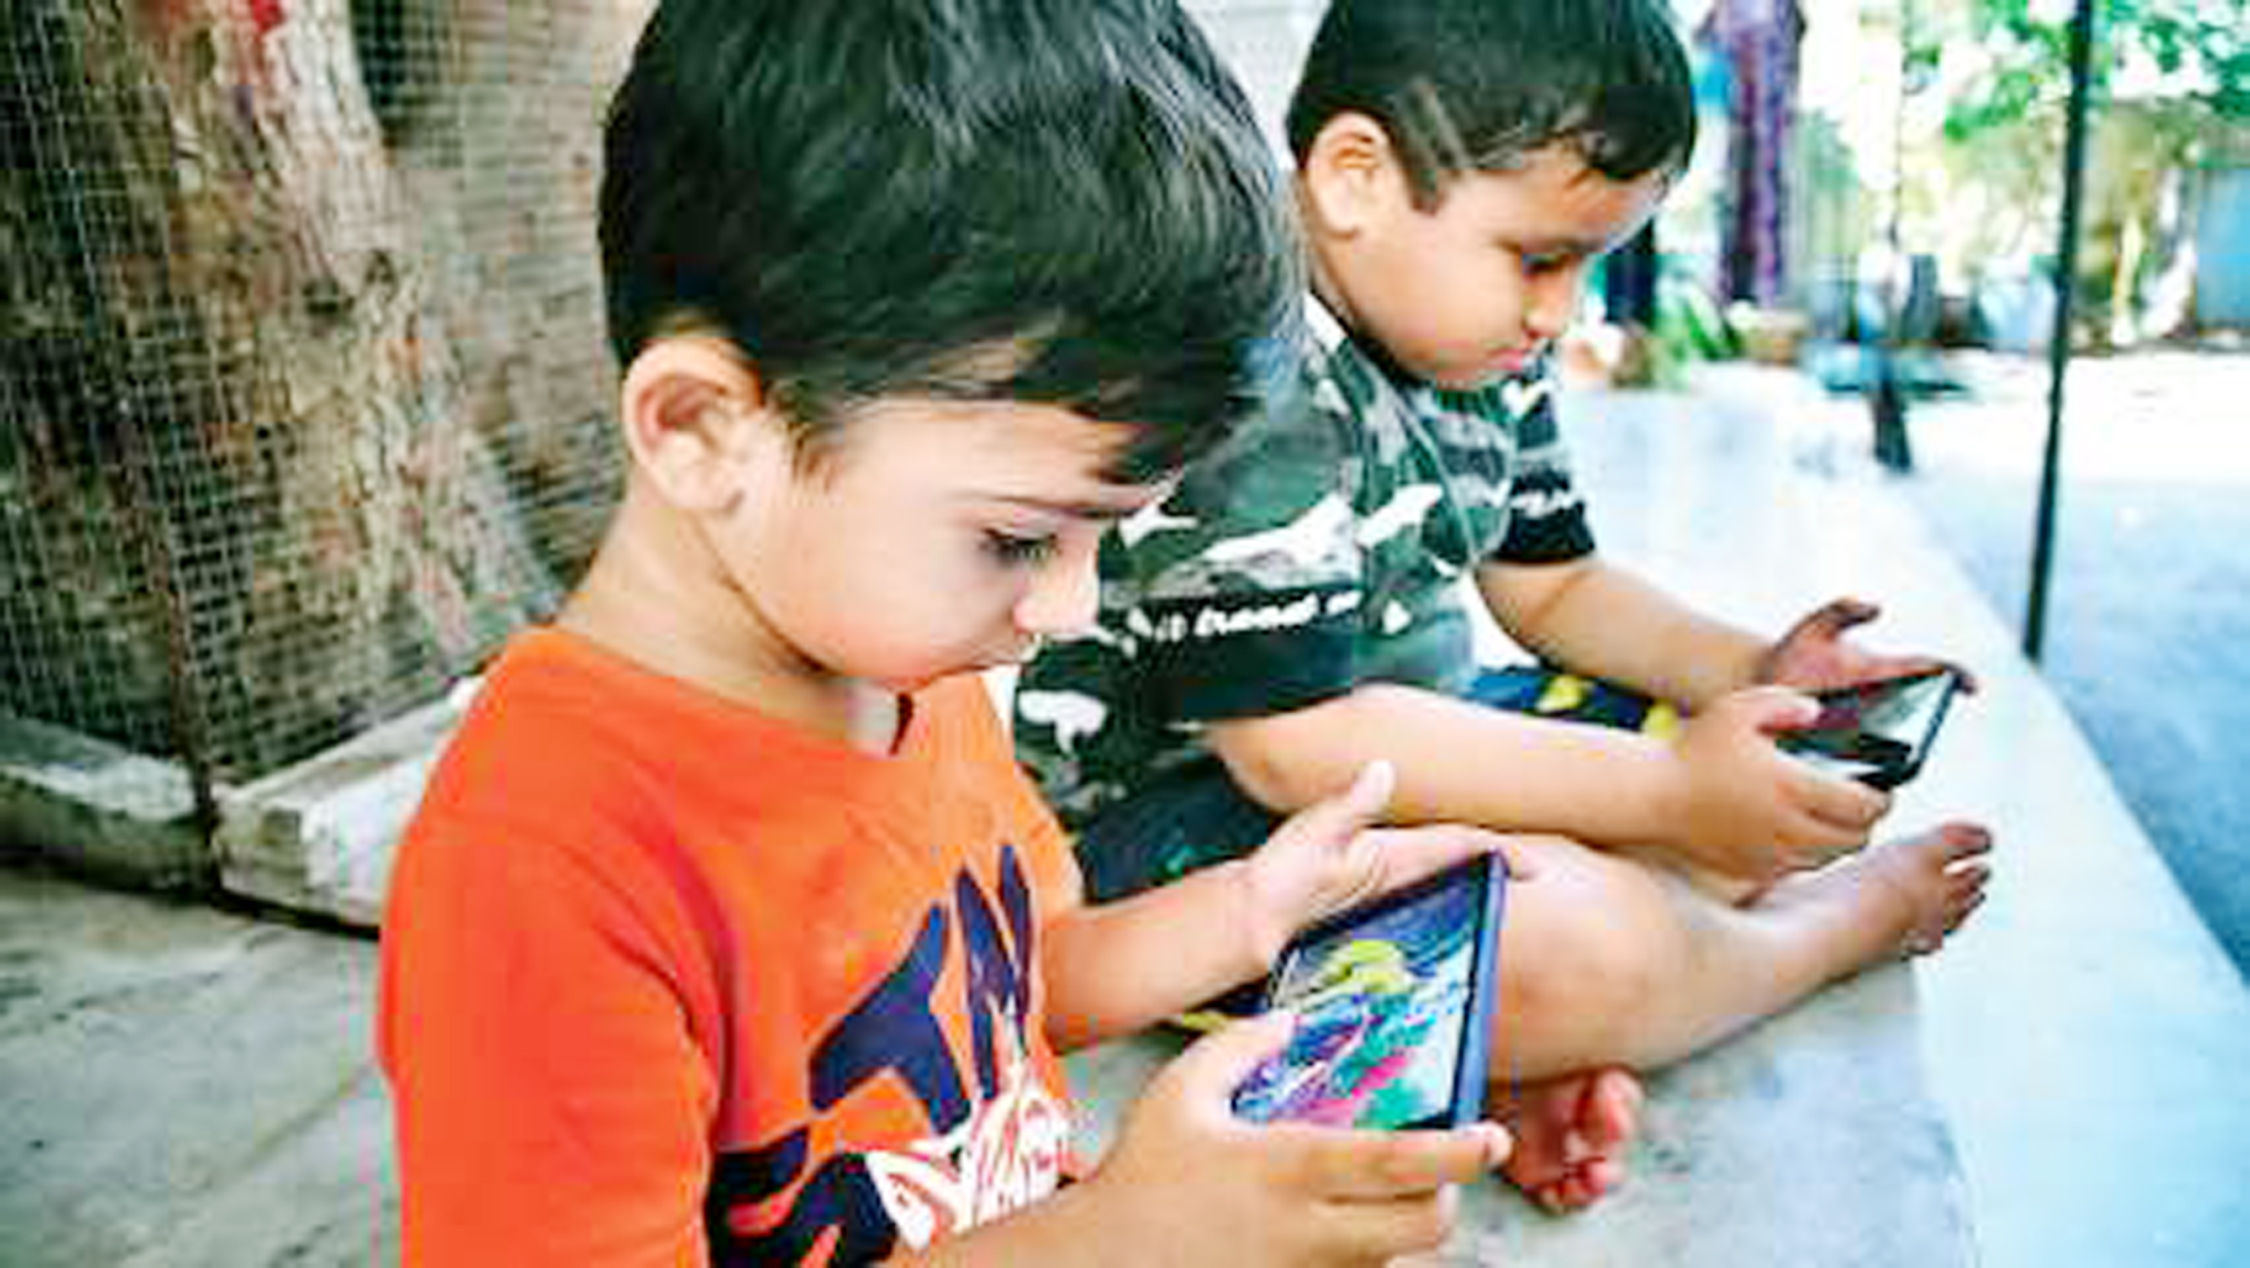 Mobile addiction in children